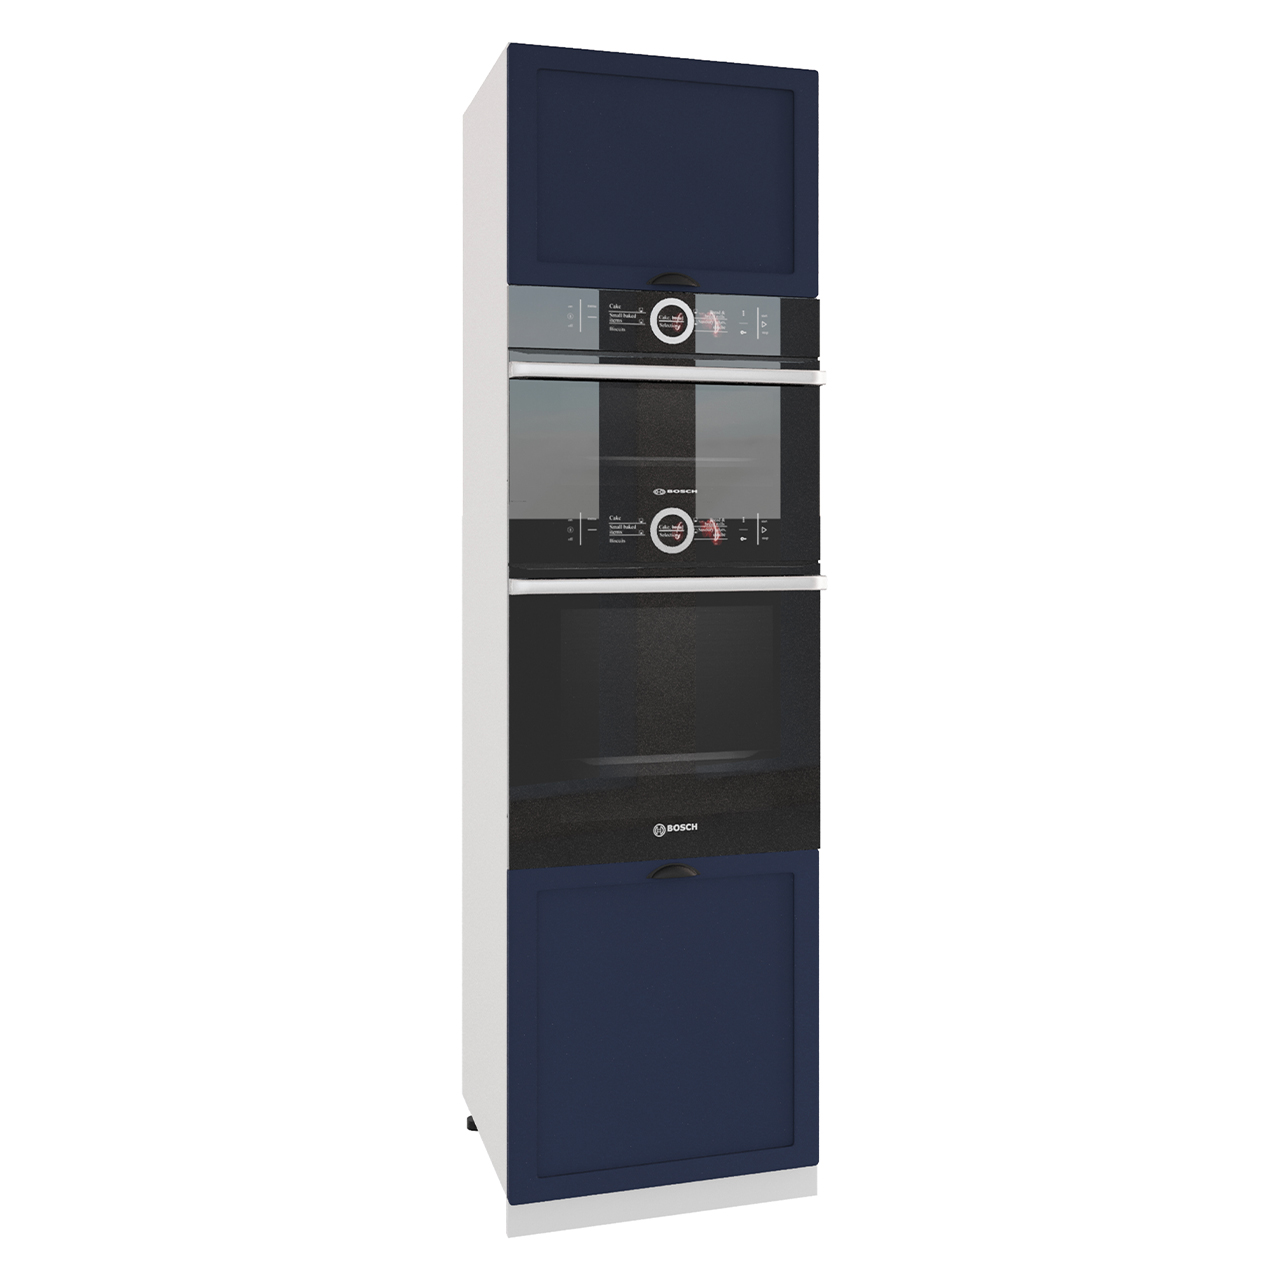 Base Cabinet for built-in oven and microwave oven ADELE D60PK MV/2133 P/L navy blue matt